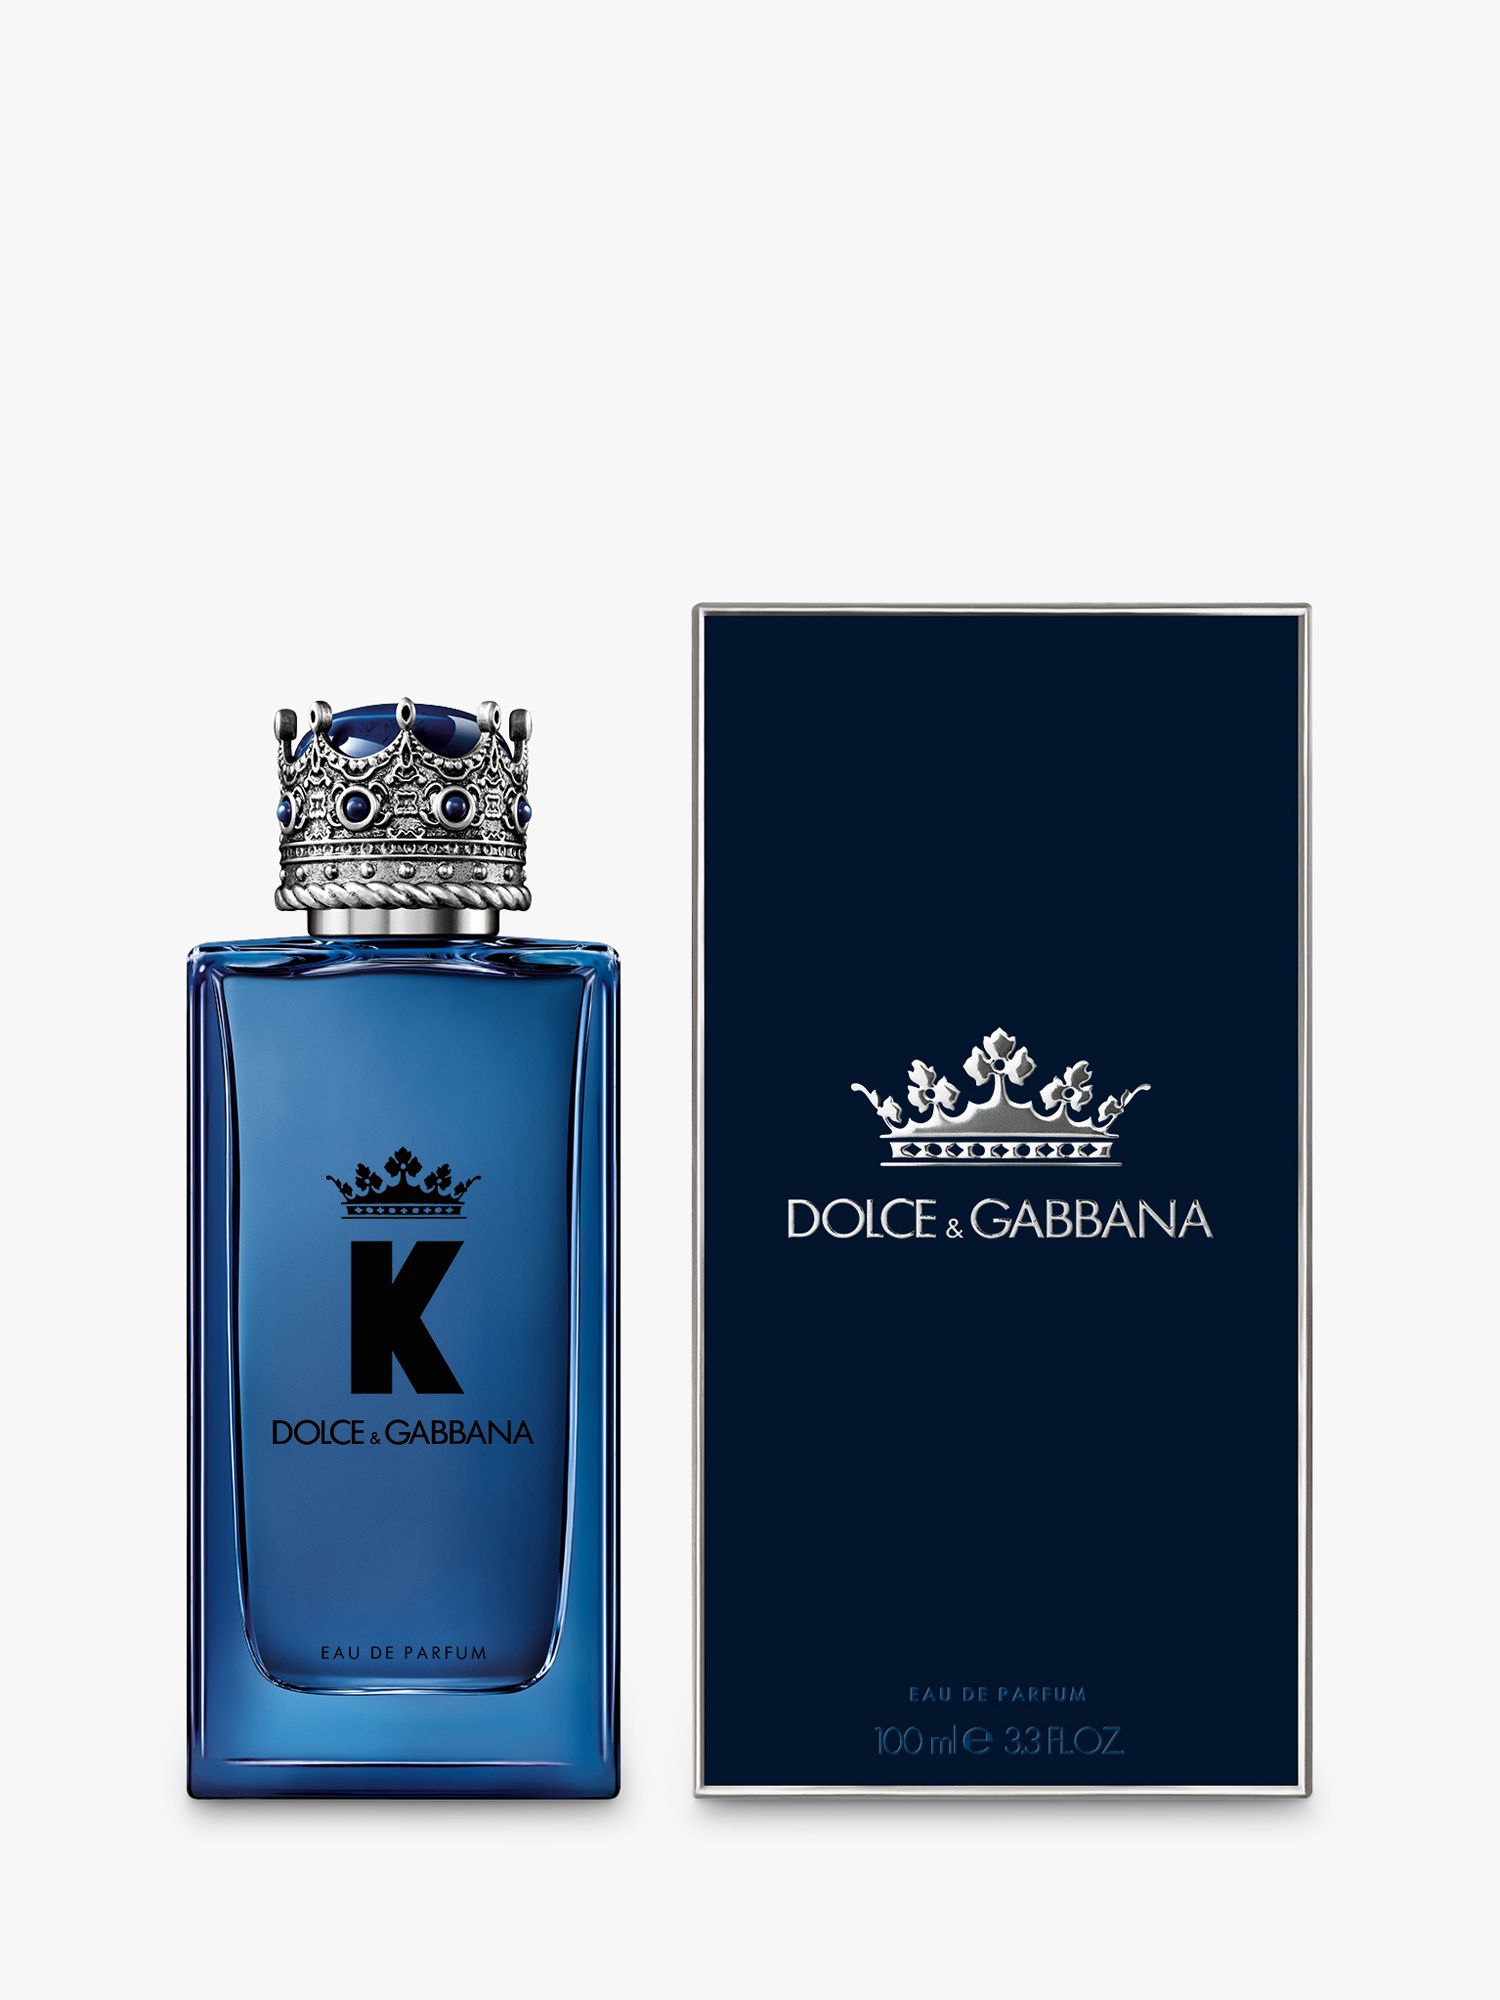 dolce and gabbana k perfume price